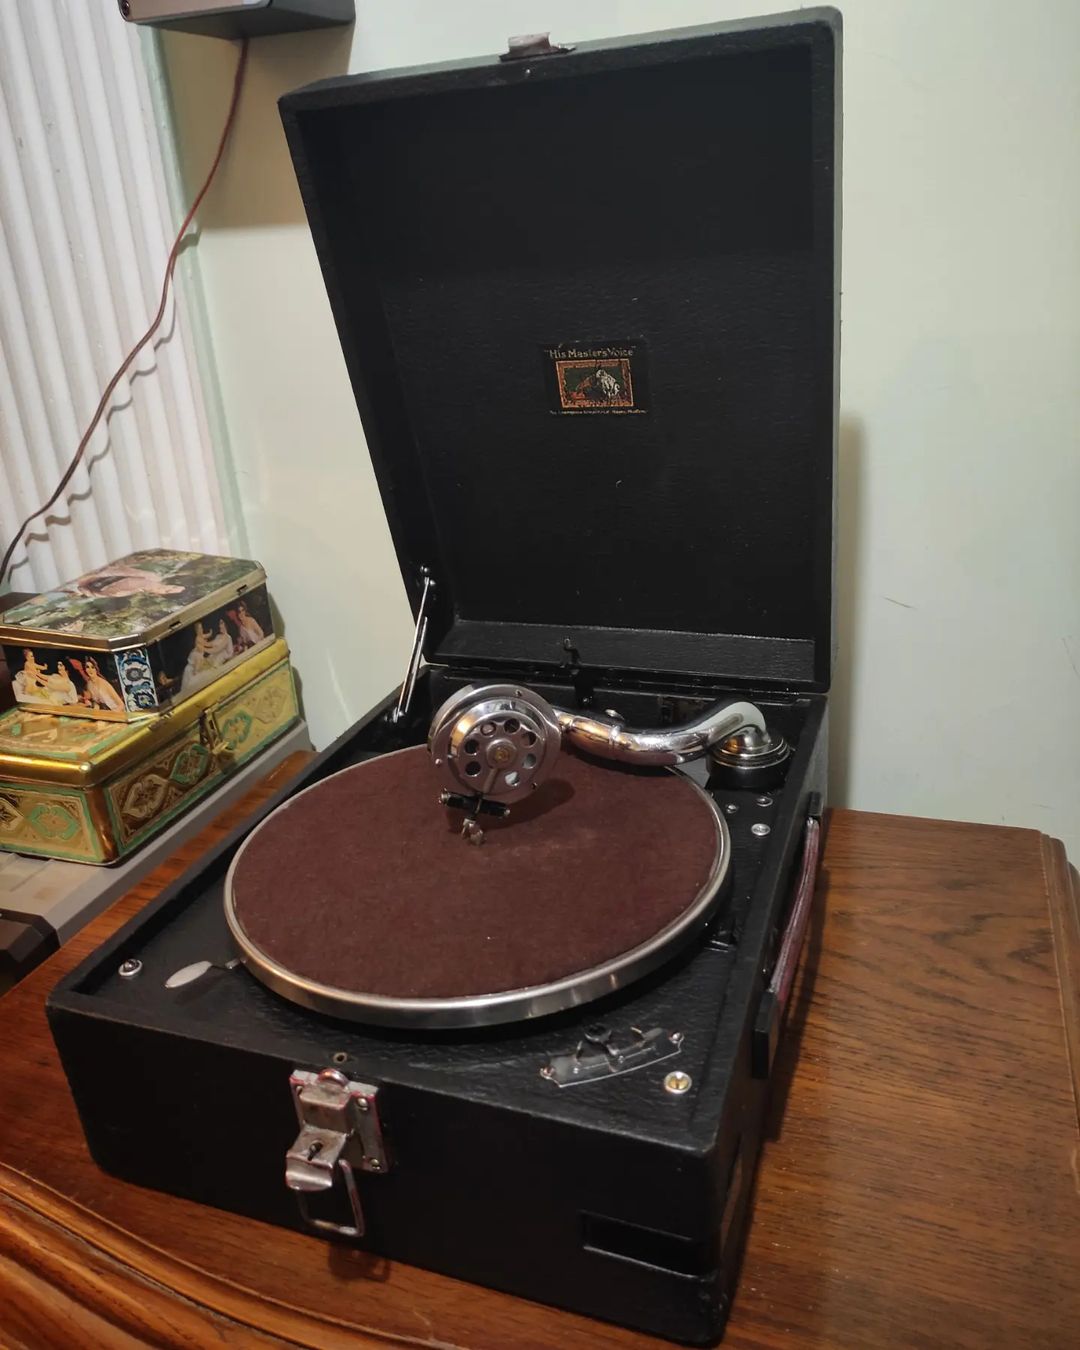 His Master Voice brand bag gramophone – Vintage Type Shop